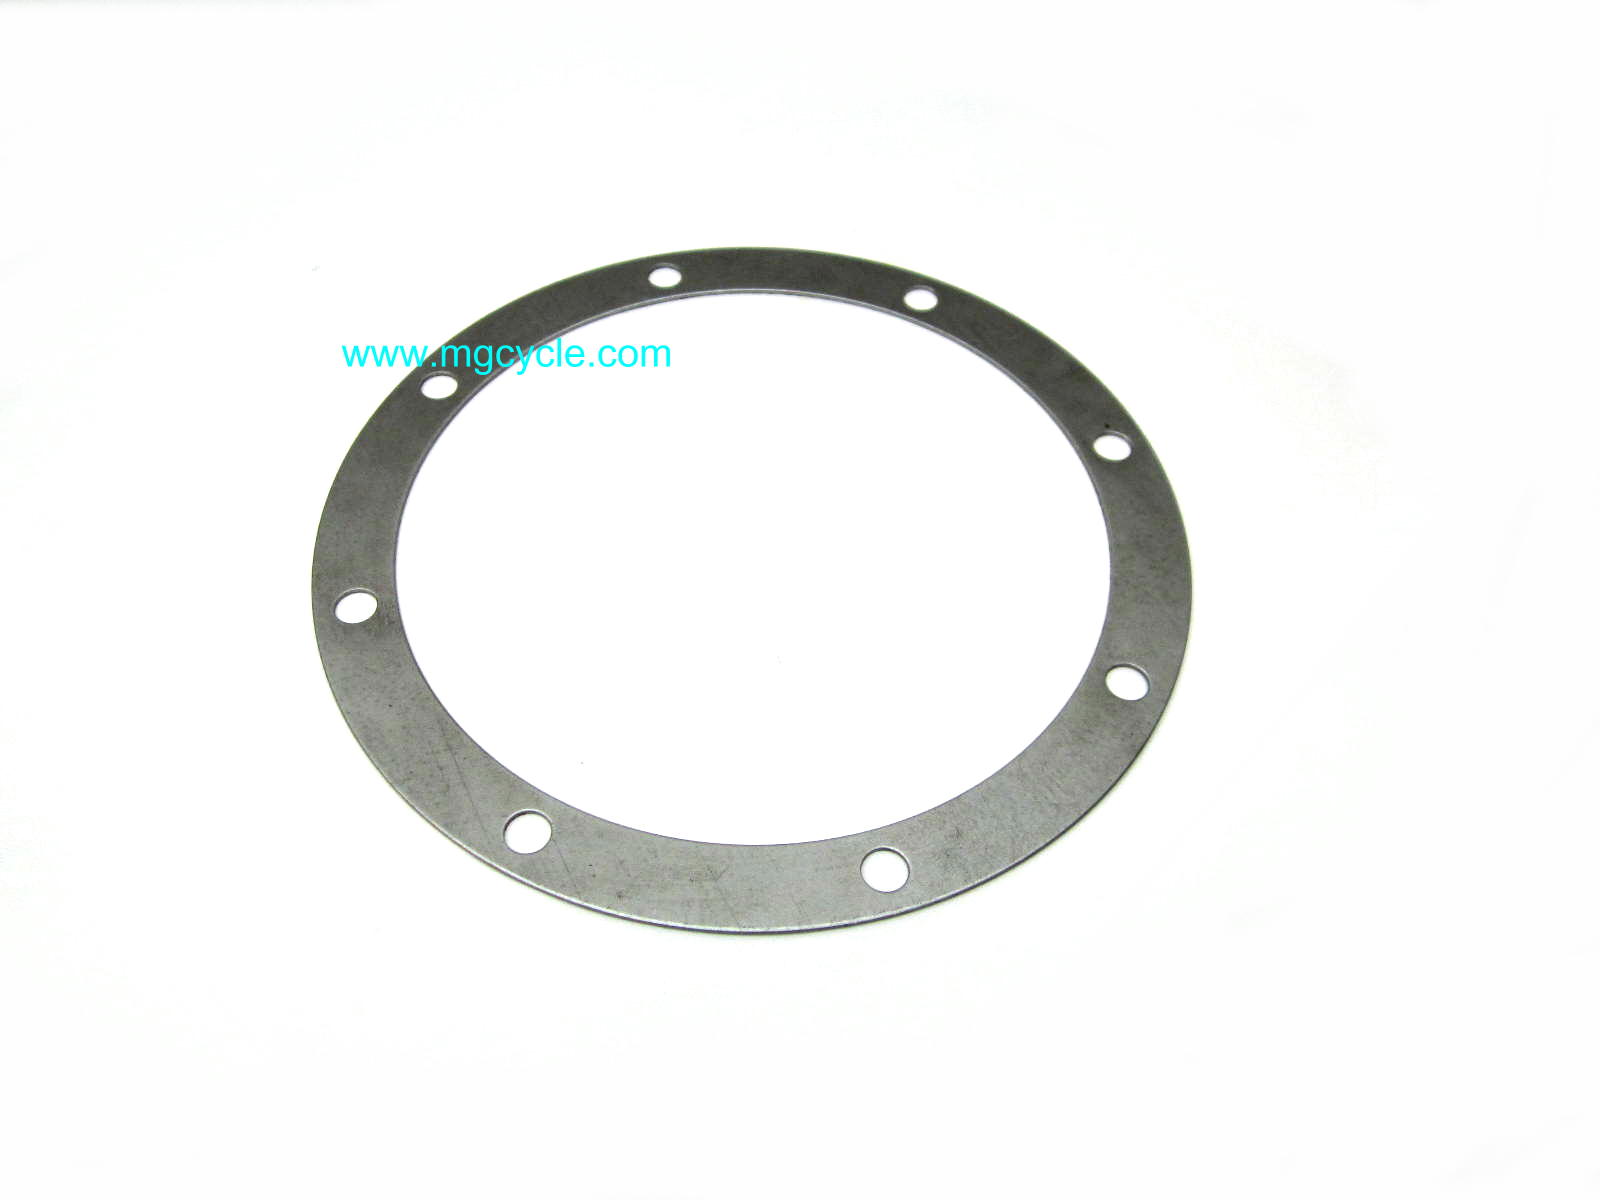 Rear drive box shim, large, Disc brake 1.2 mm GU17355408